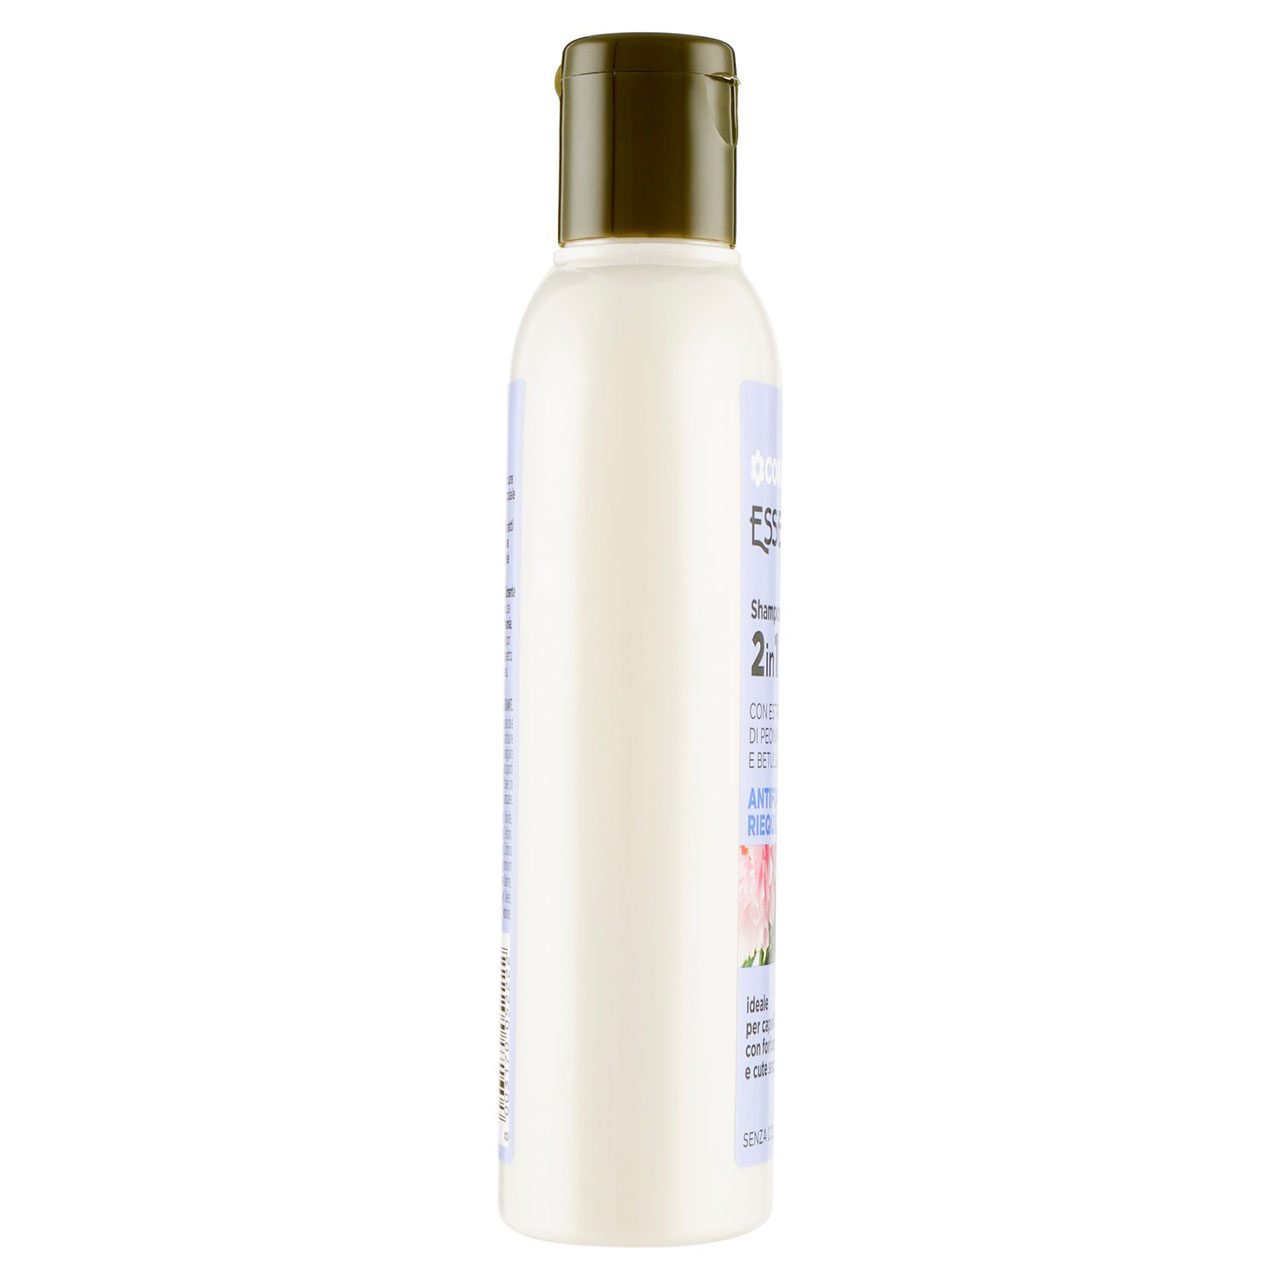 CONAD Essentiae Shampoo e Balsamo 2in1 Antiforfora riequilibrante 250 ml